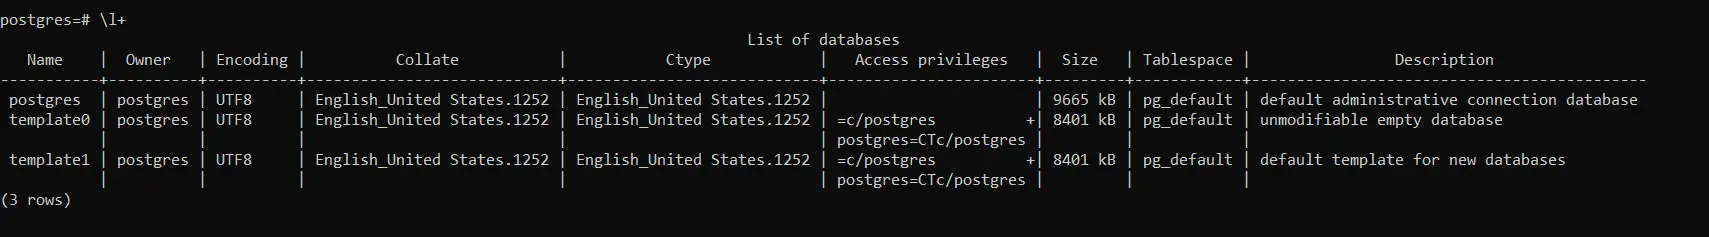 lista de bases de datos usando sin + adjunto